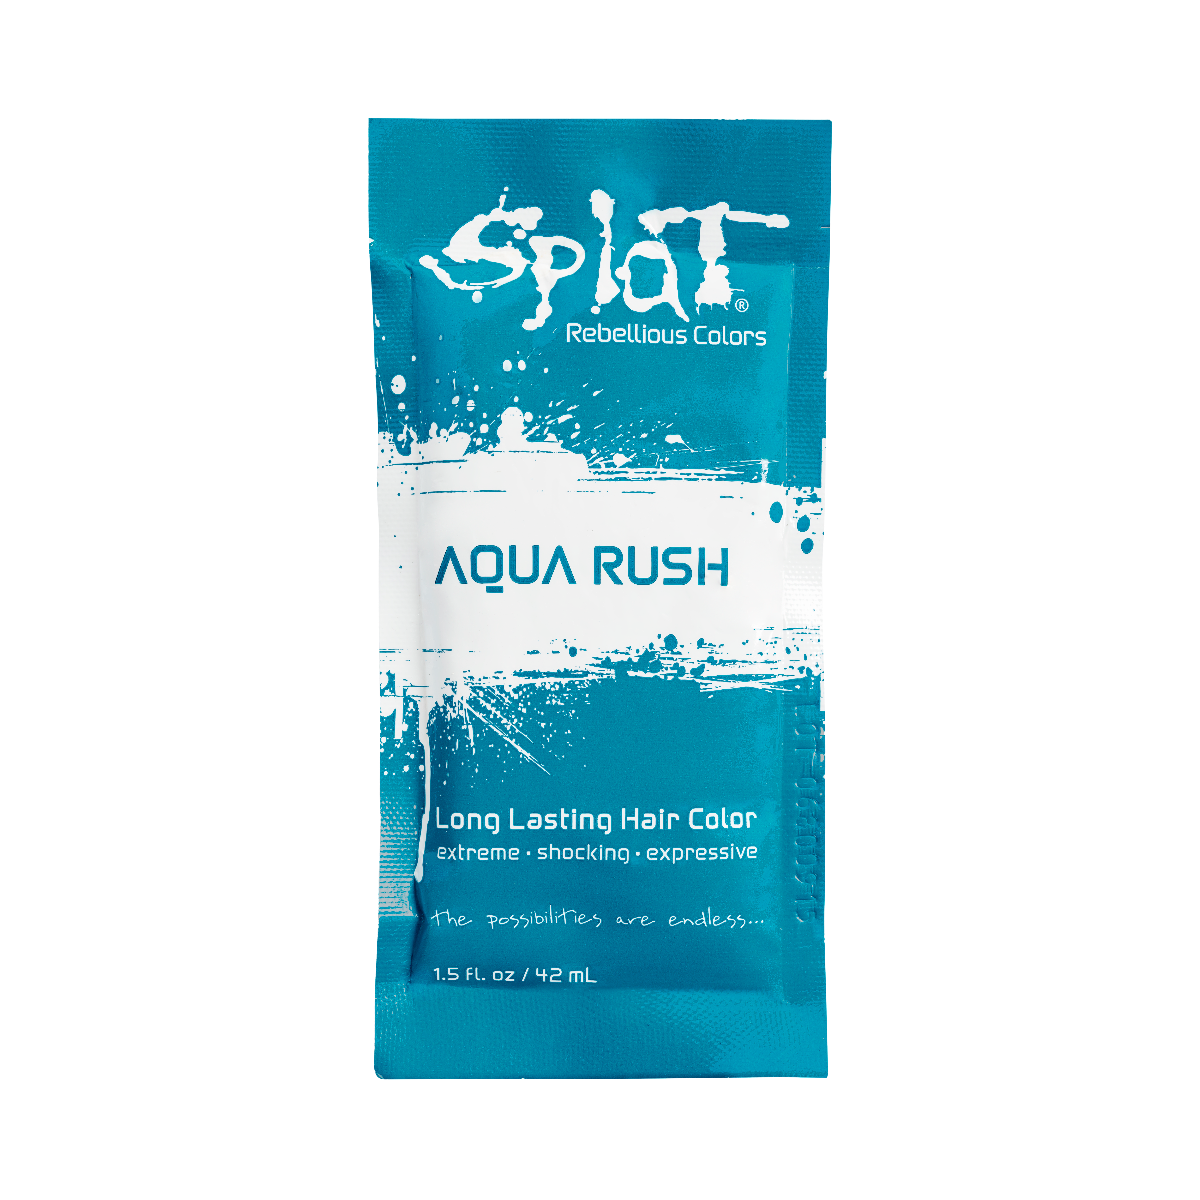 Splat Hair Dye Original Singles Foil Packet in Aqua Rush Blue Semi-Permanent Hair Dye